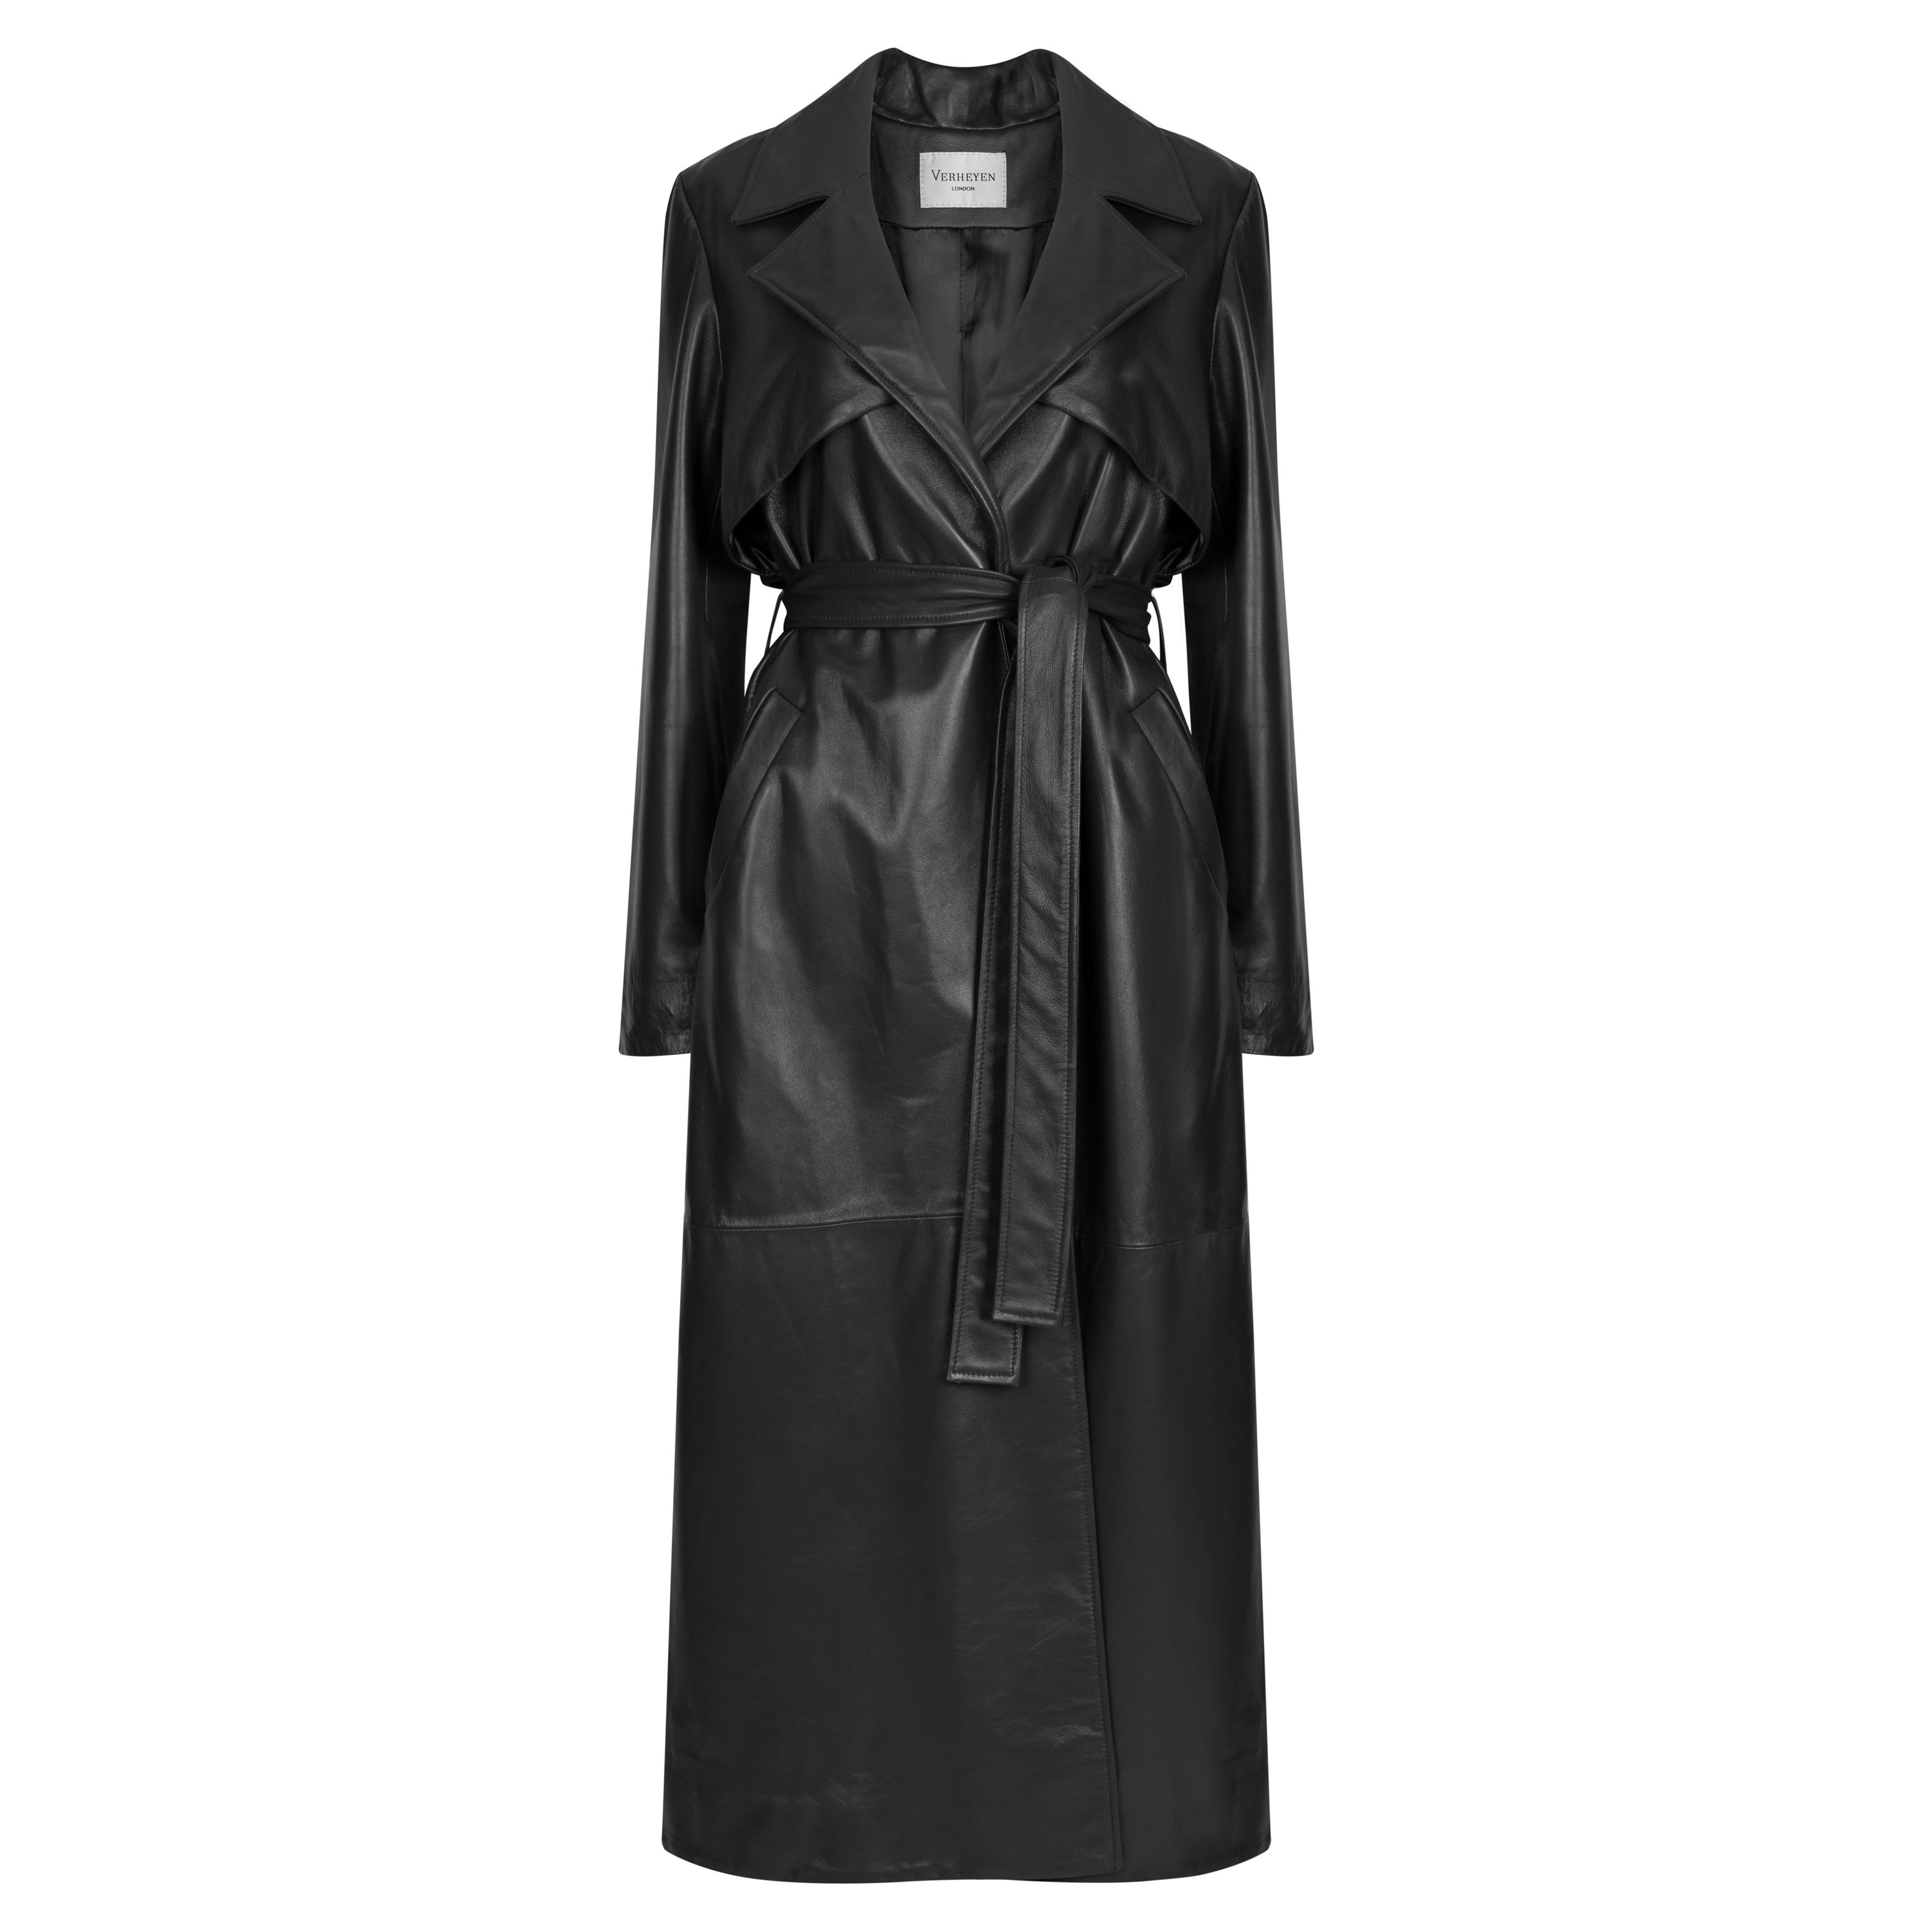 Verheyen London Leather Trench Coat in Black  - Size uk 6 For Sale